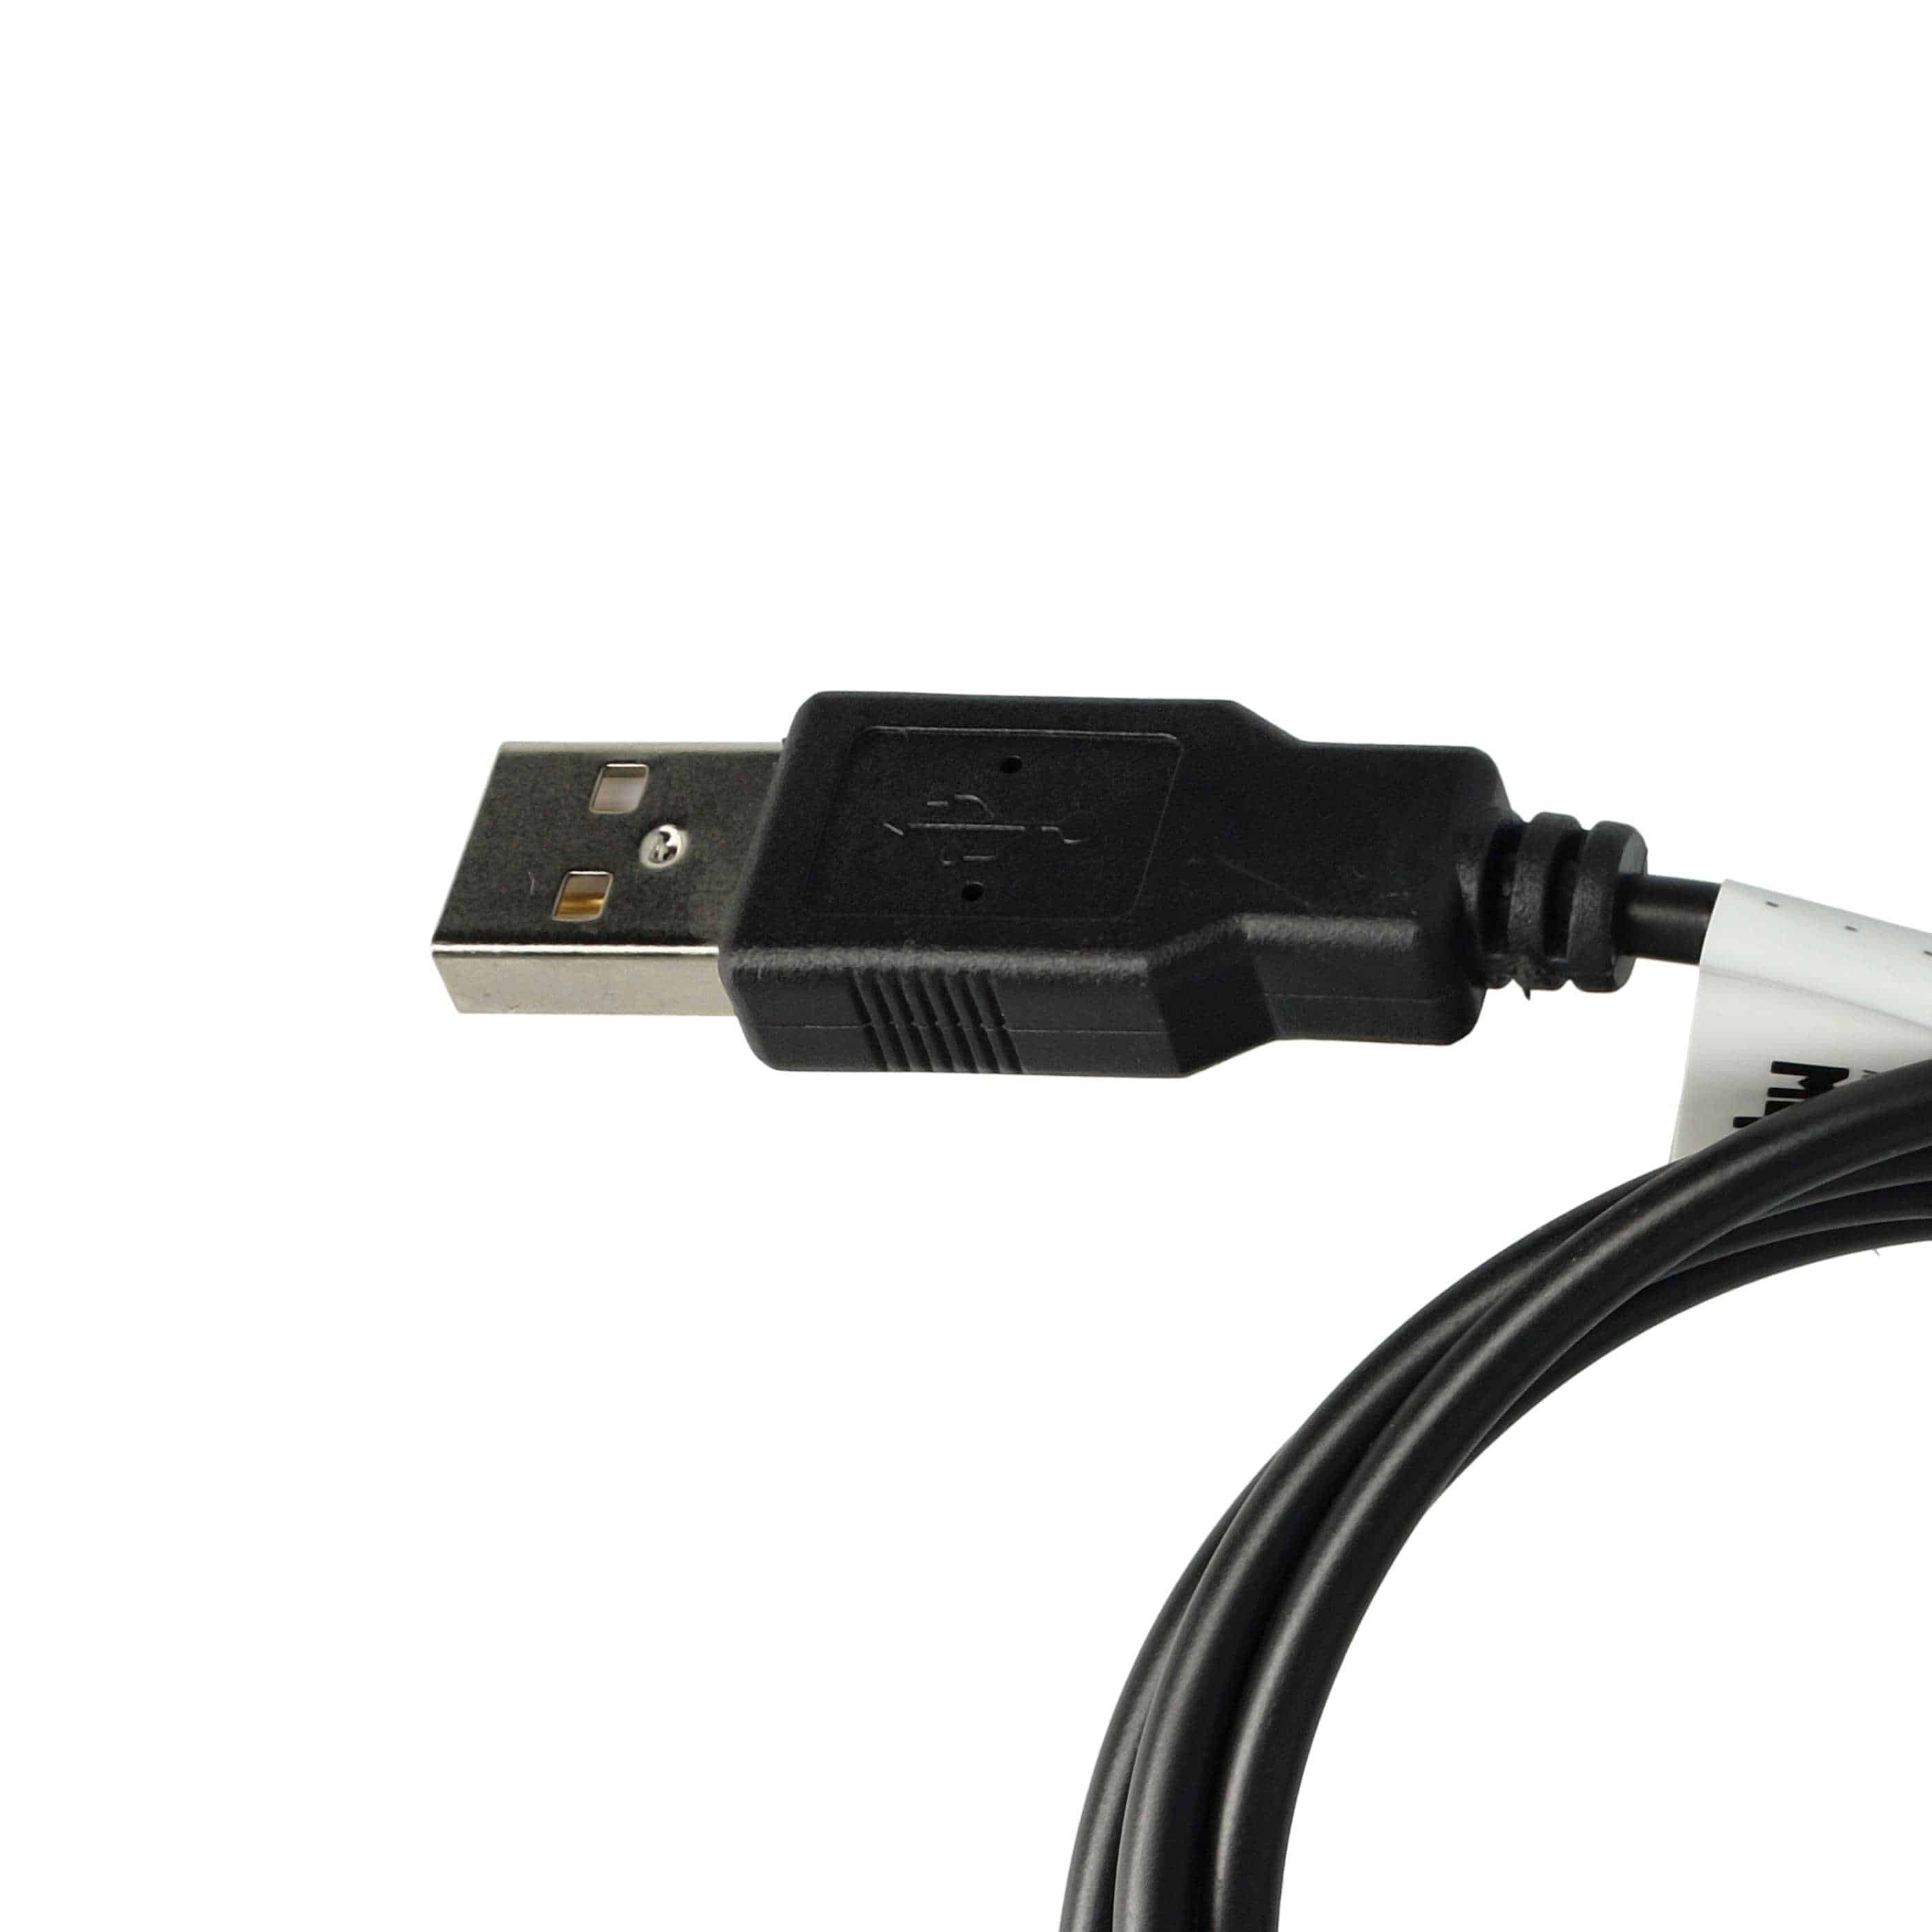 Cable de datos USB para cámaras Belkin, etc. - 100 cm